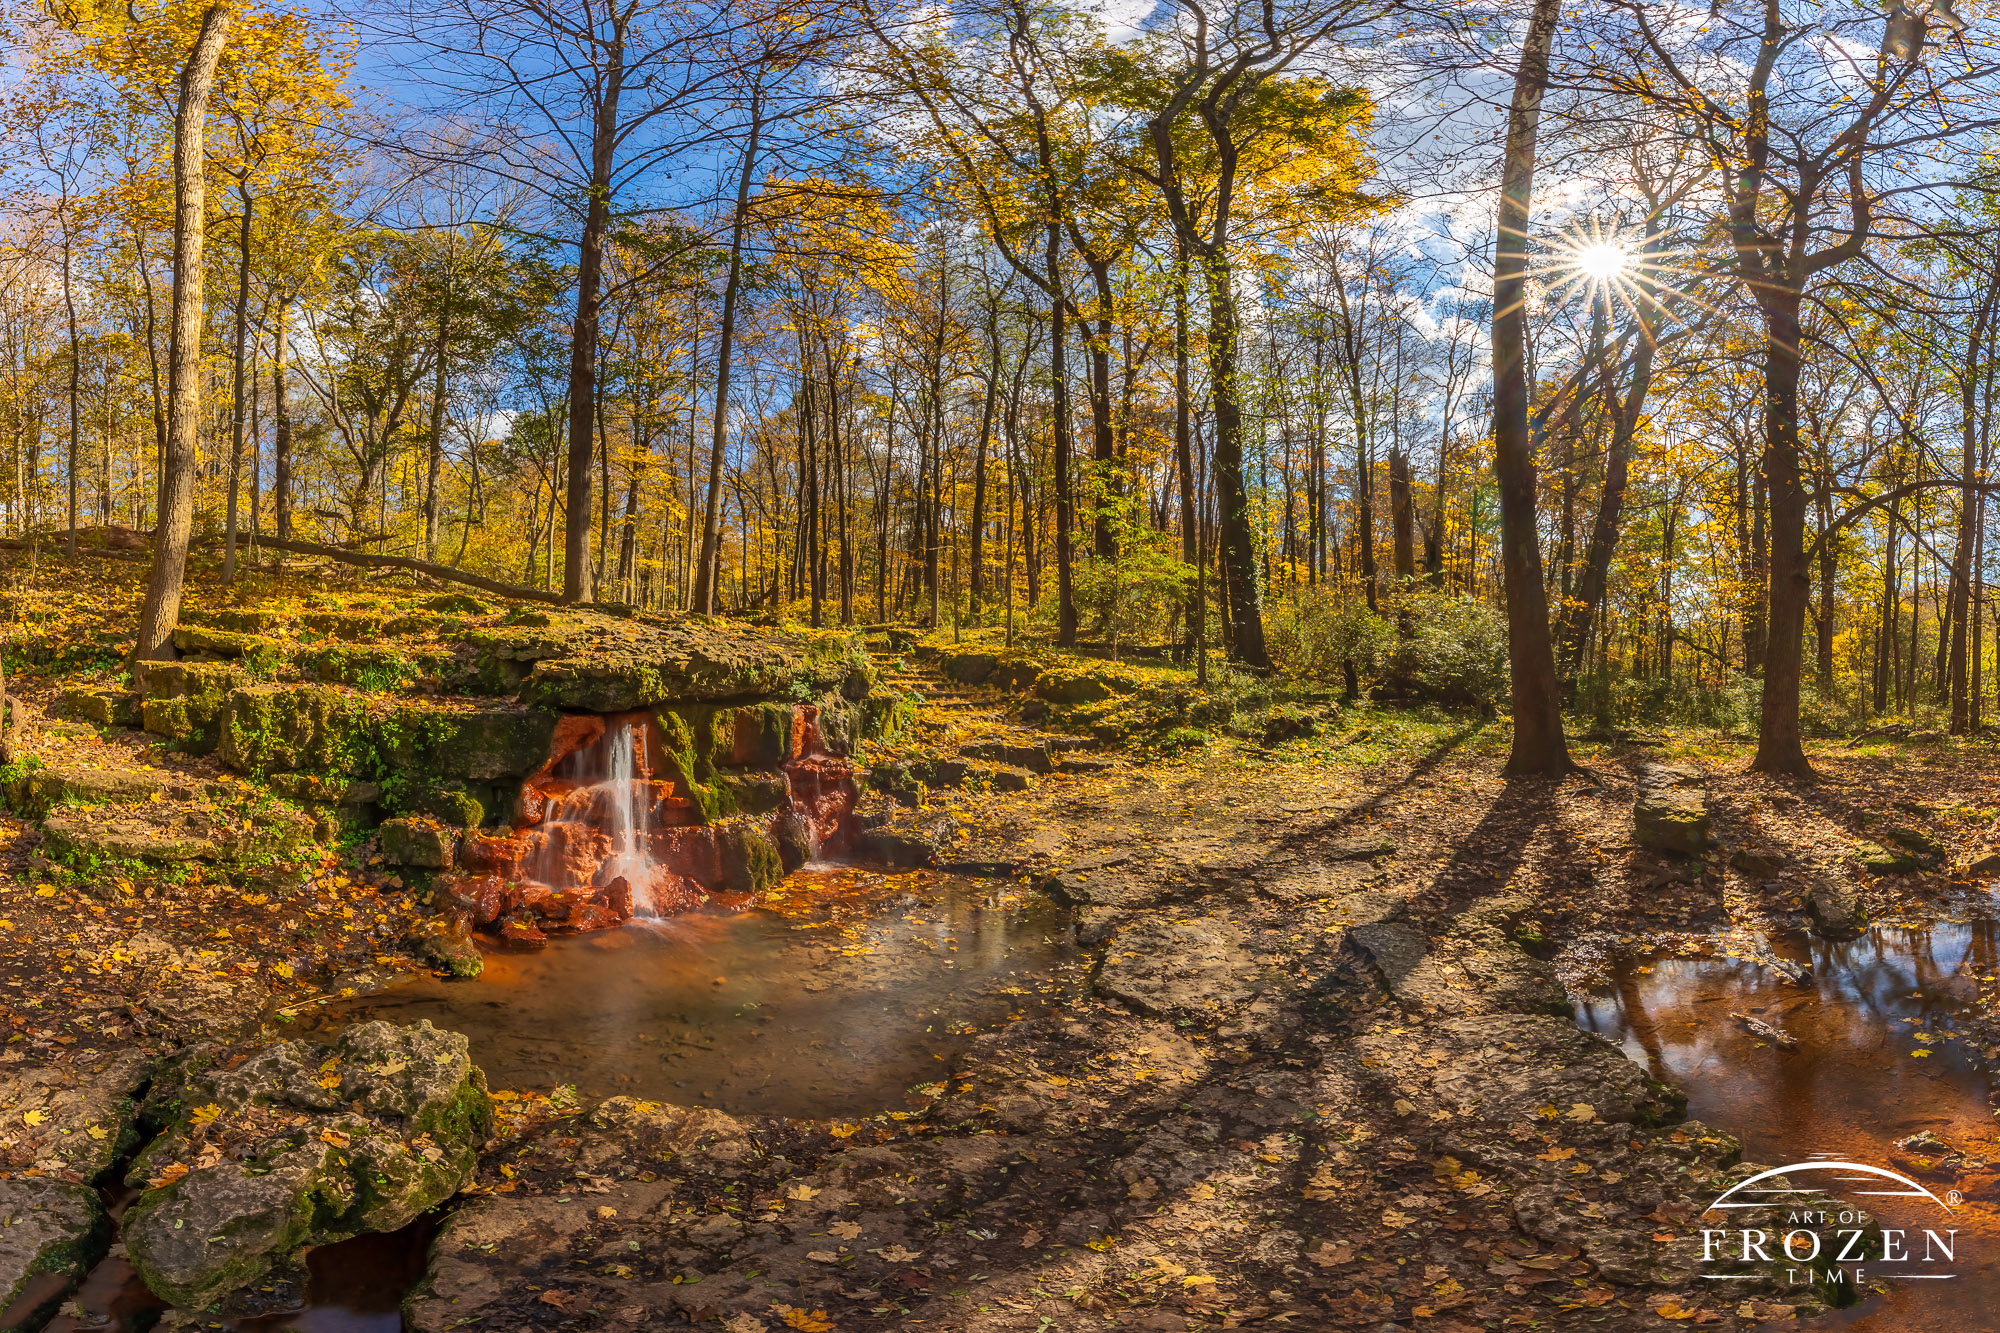 An autumn scene from Glen Helen Nature Preserve where the bright sun illuminates the park’s sugar maple leaves